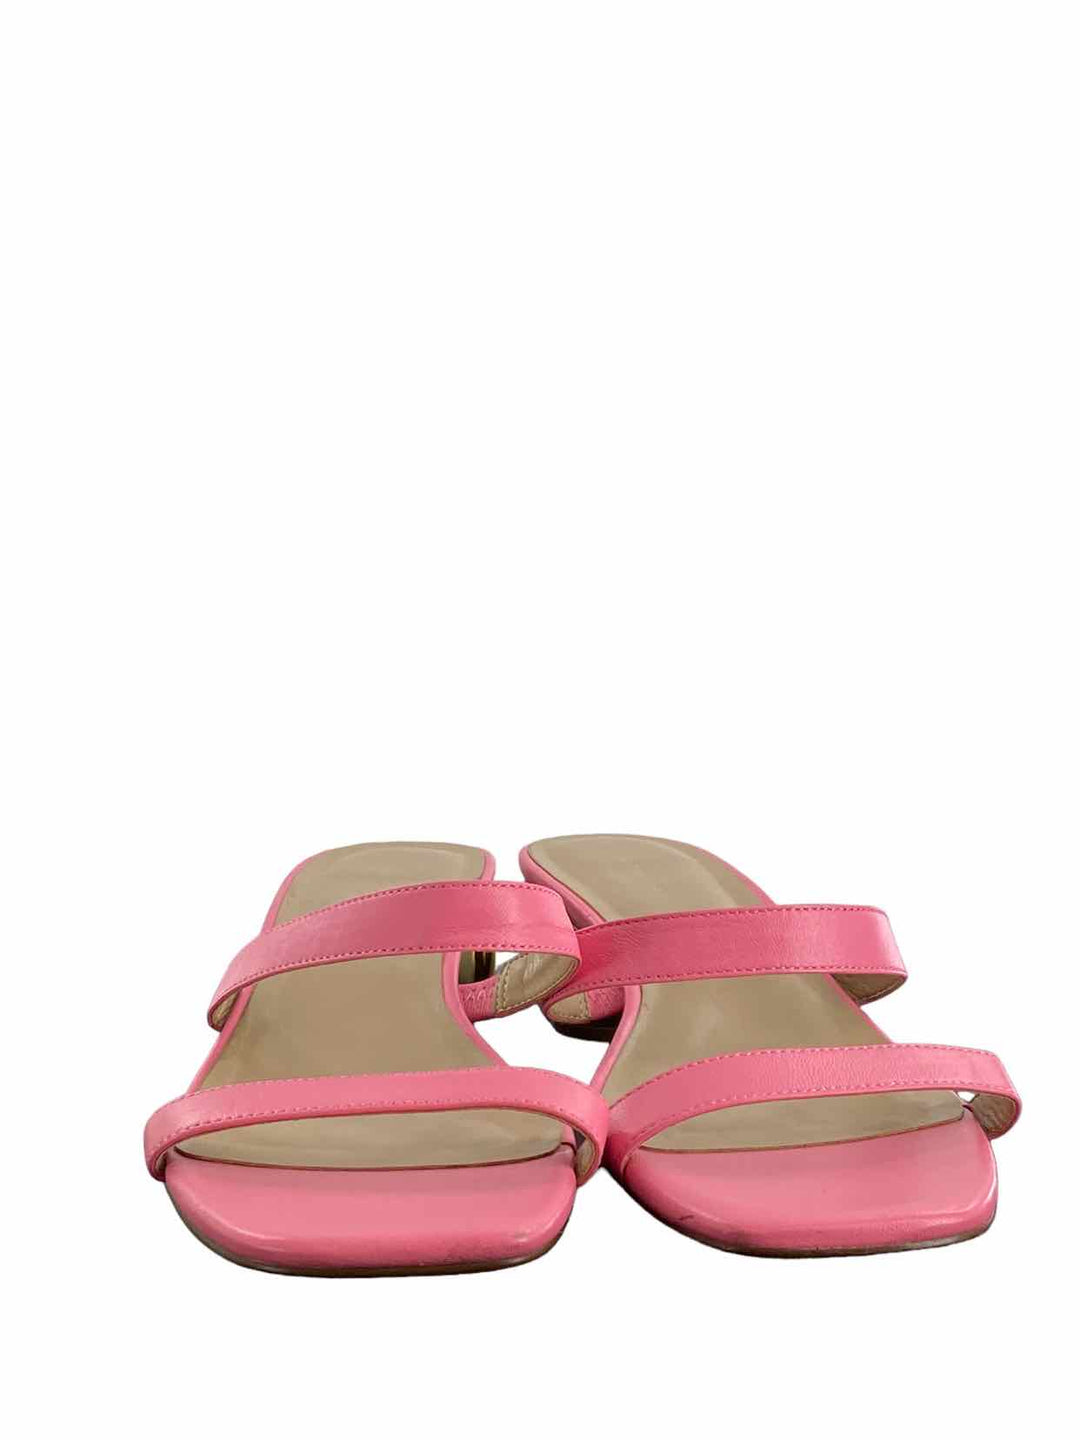 Ann Taylor Shoe Size 8.5 Pink Heels